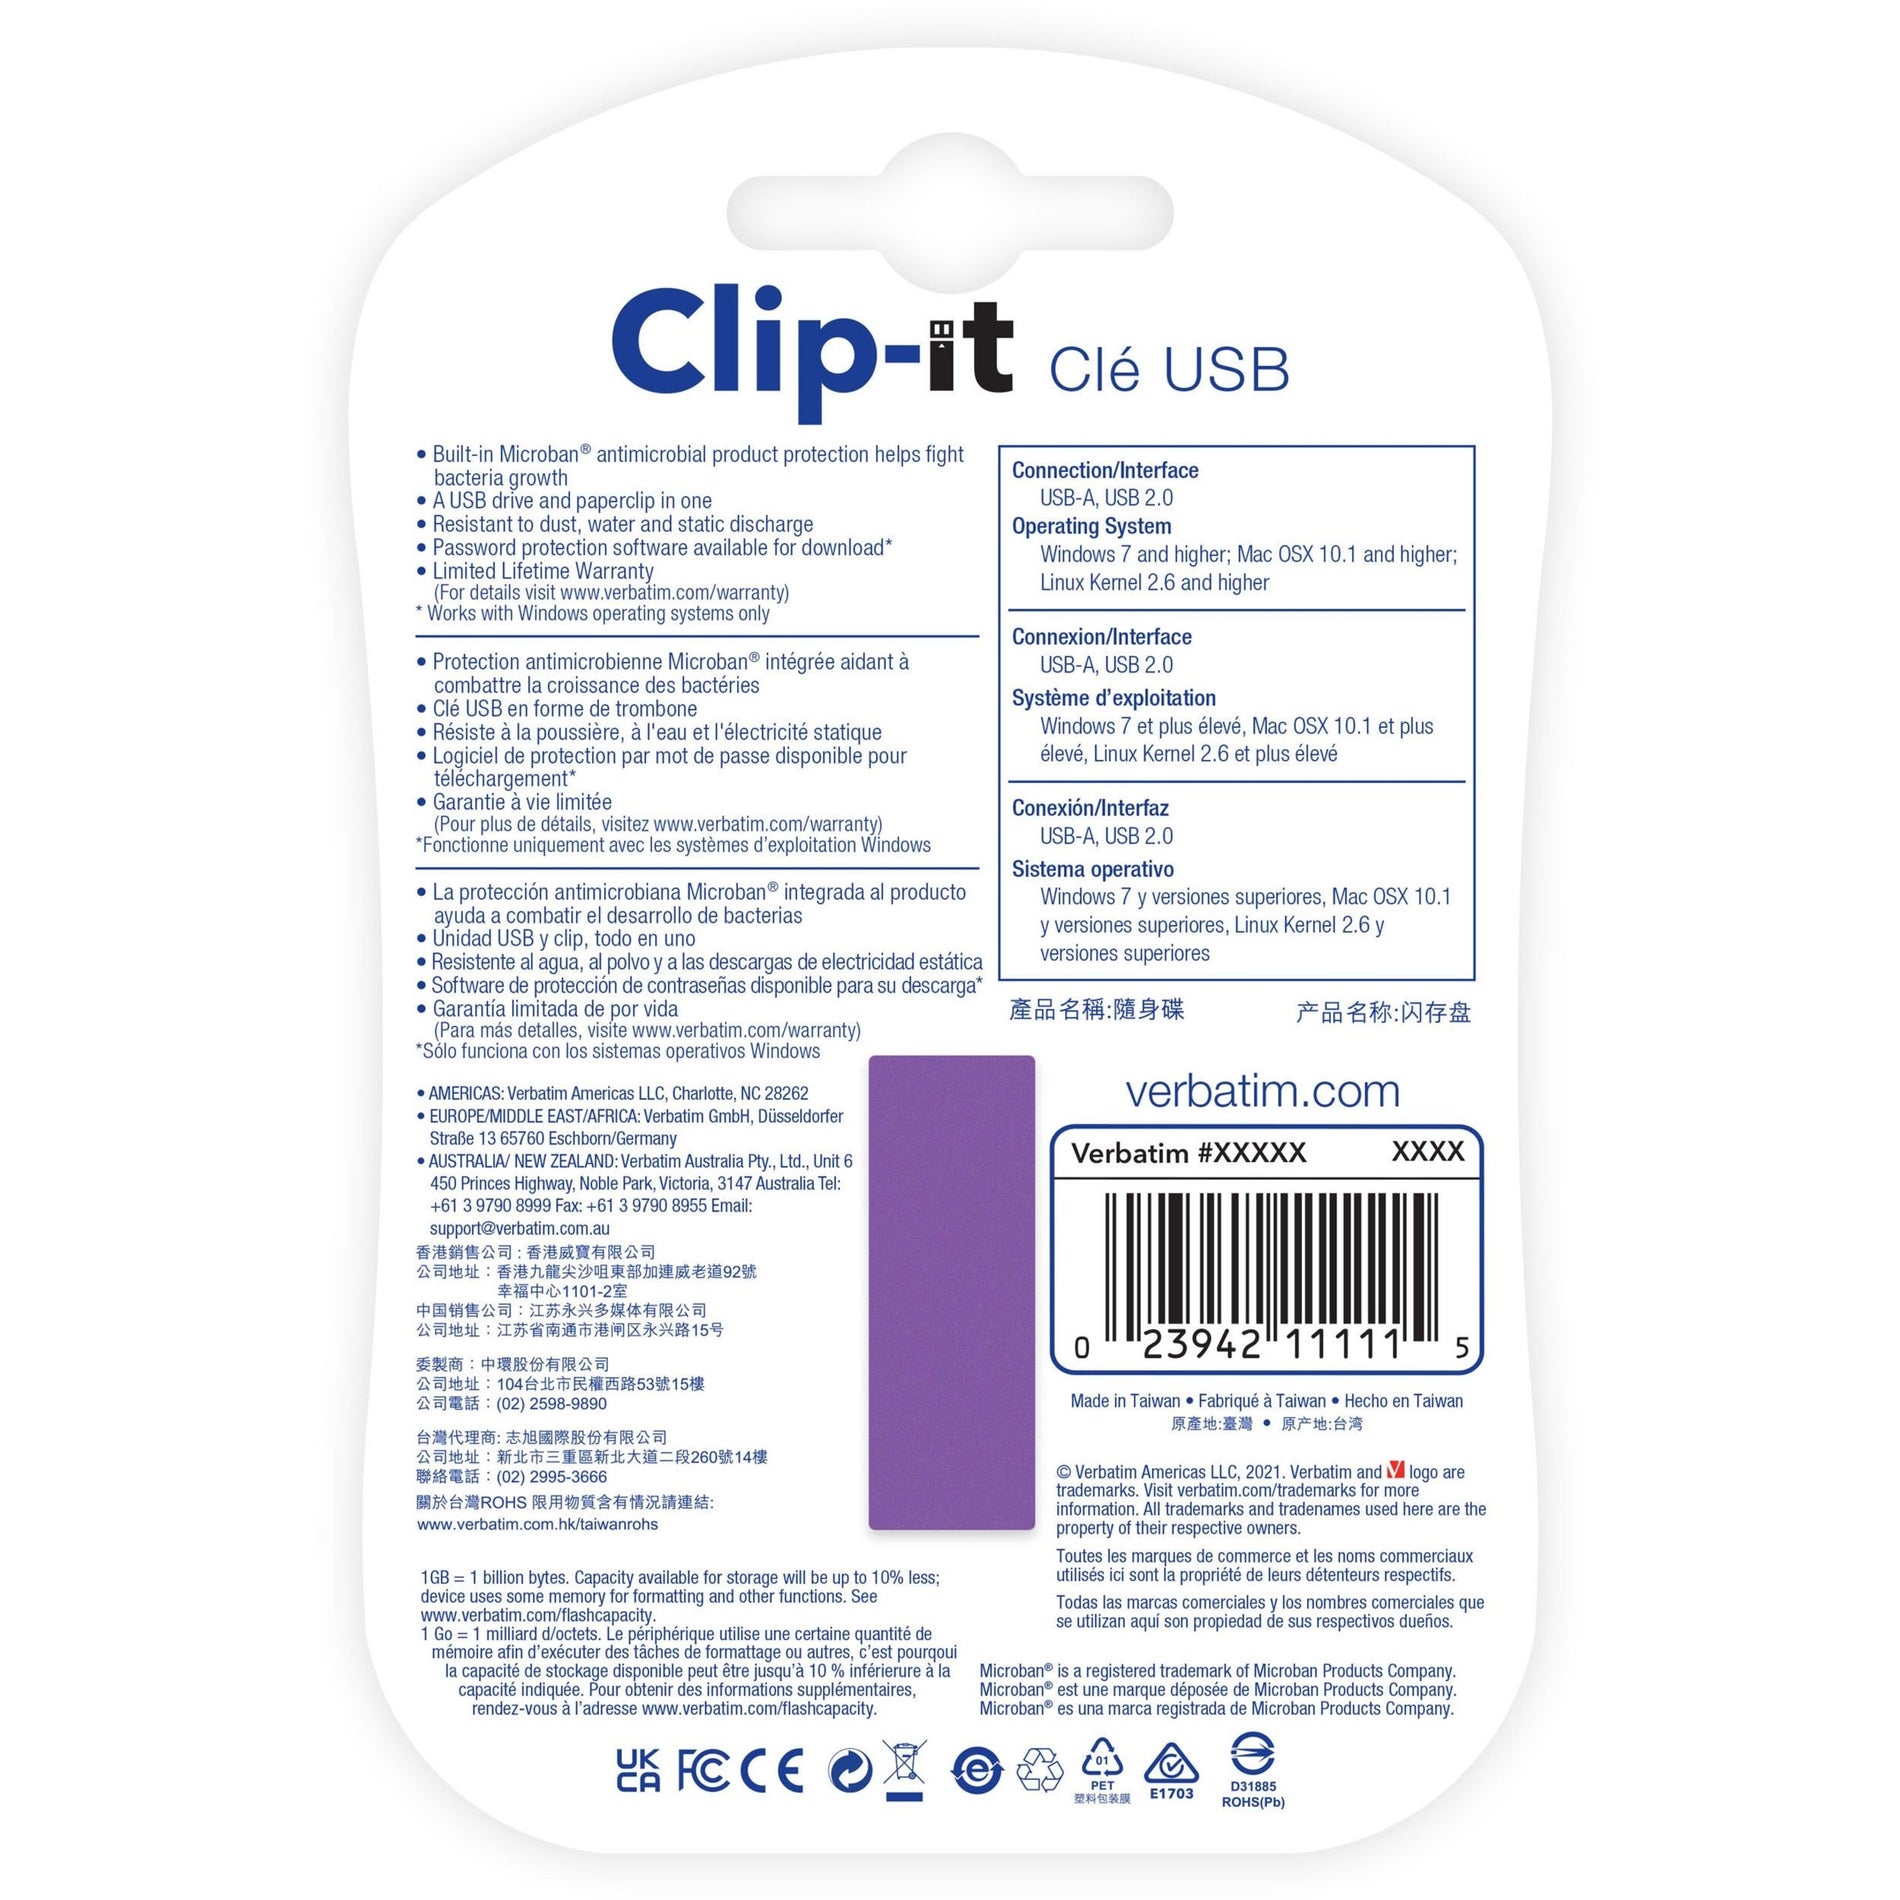 Microban 43952 Clip-it USB Flash Drive, Violet, 16GB - Lifetime Warranty